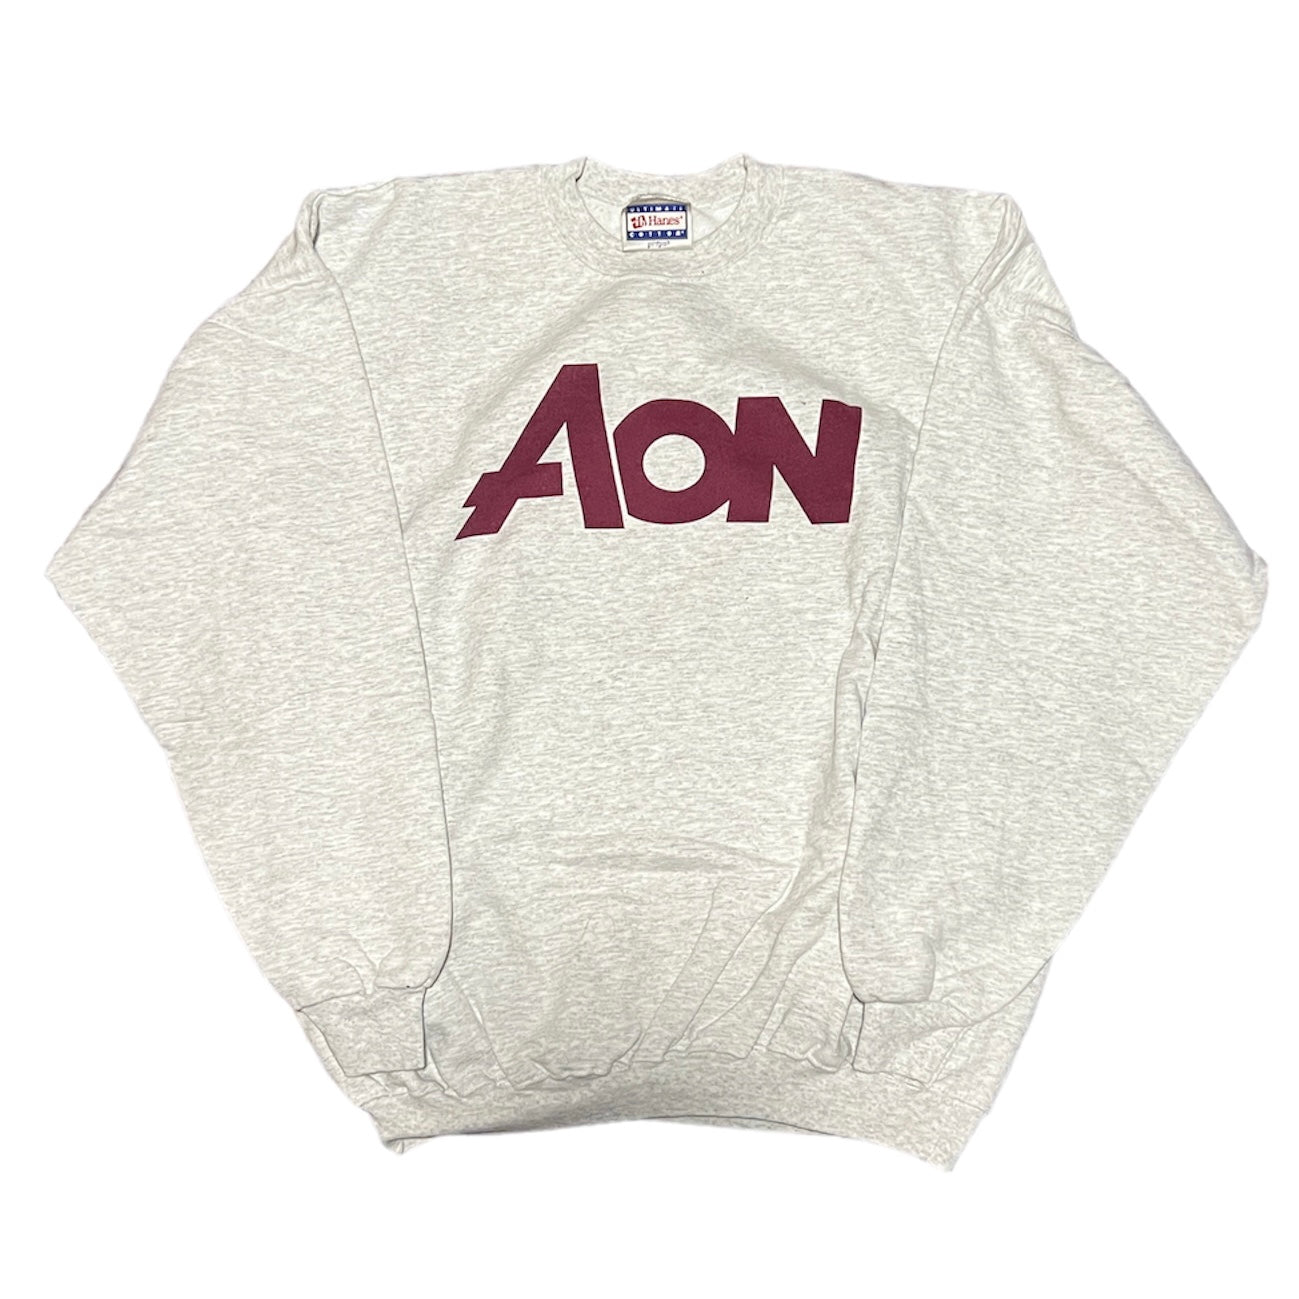 Aon Sweatshirt Printed on Hanes Cotton Printpro Size XL